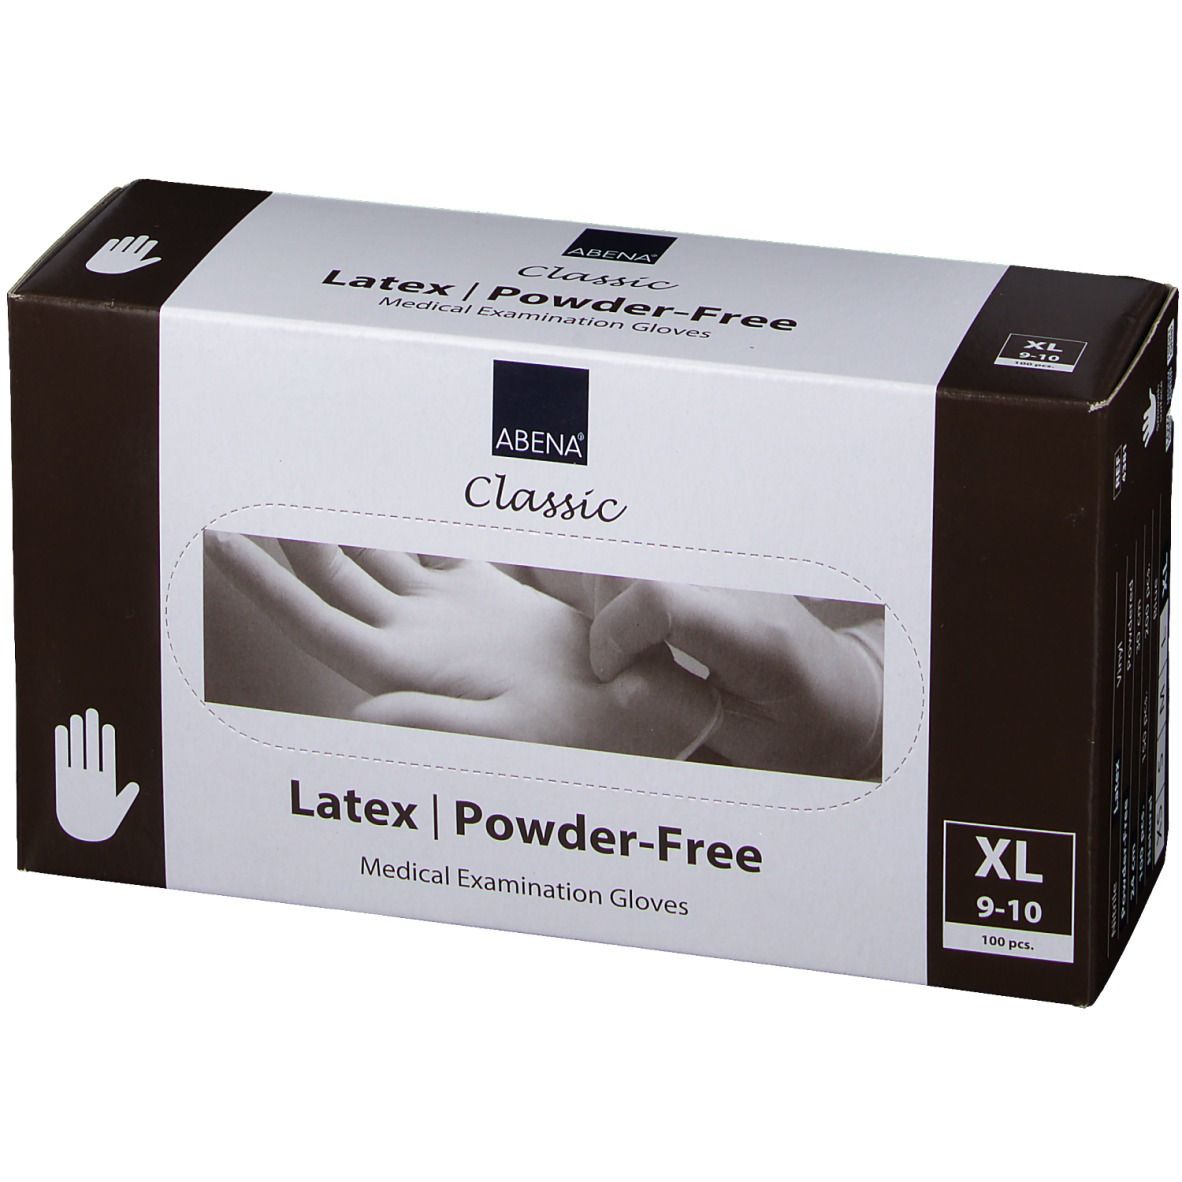 Latex-Handschuhe XL weiß puderfrei